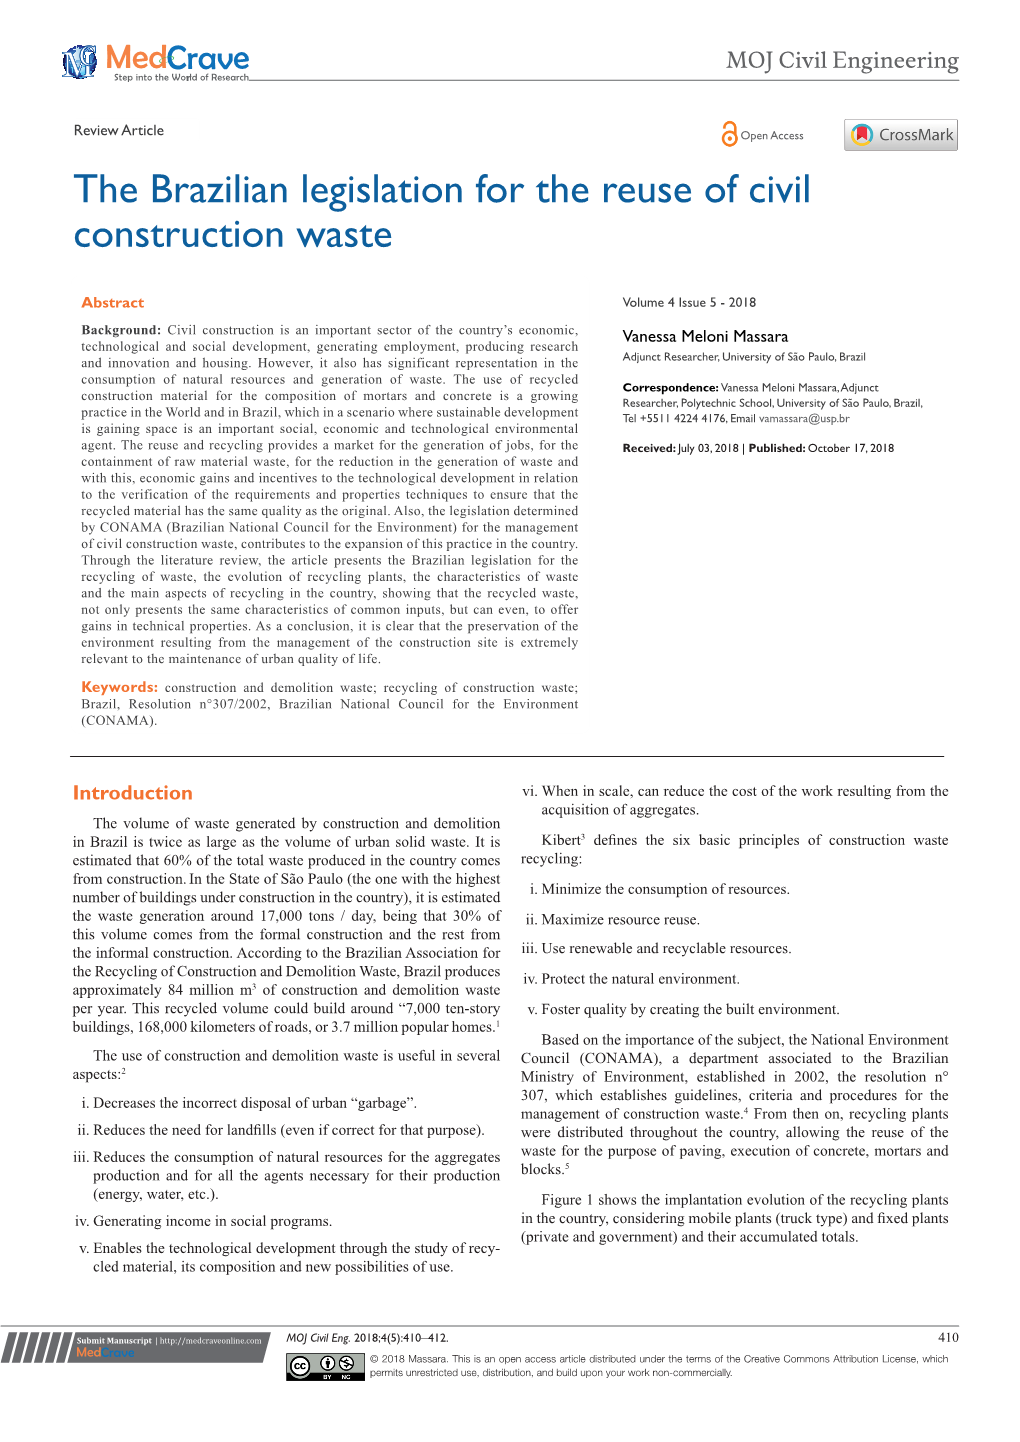 The Brazilian Legislation for the Reuse of Civil Construction Waste